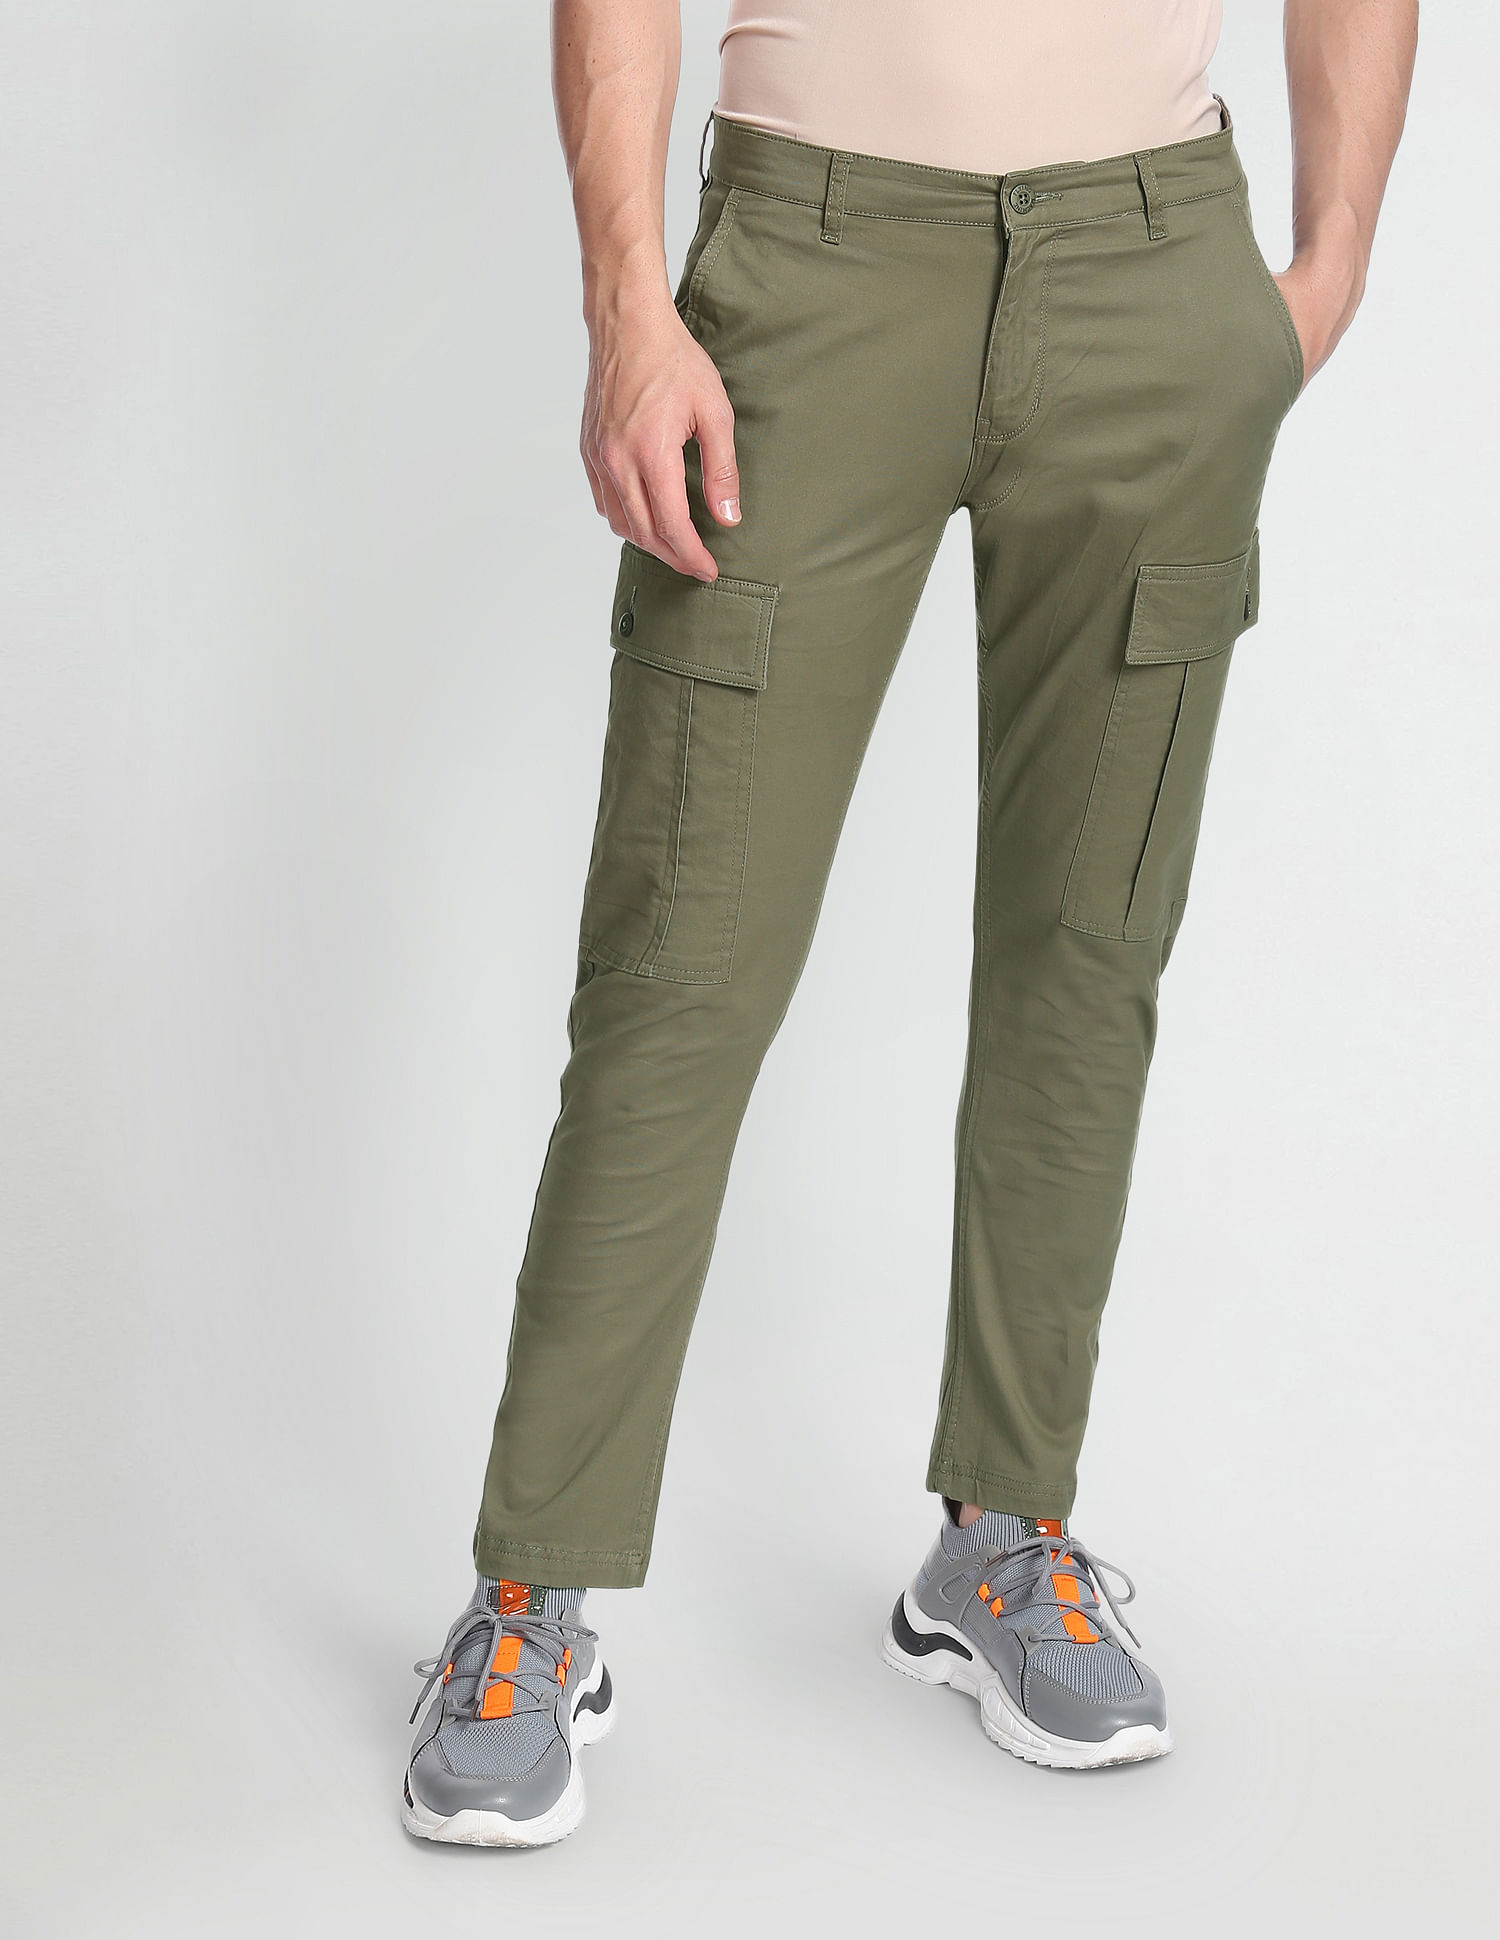 Topman cargo trousers in khaki  ASOS